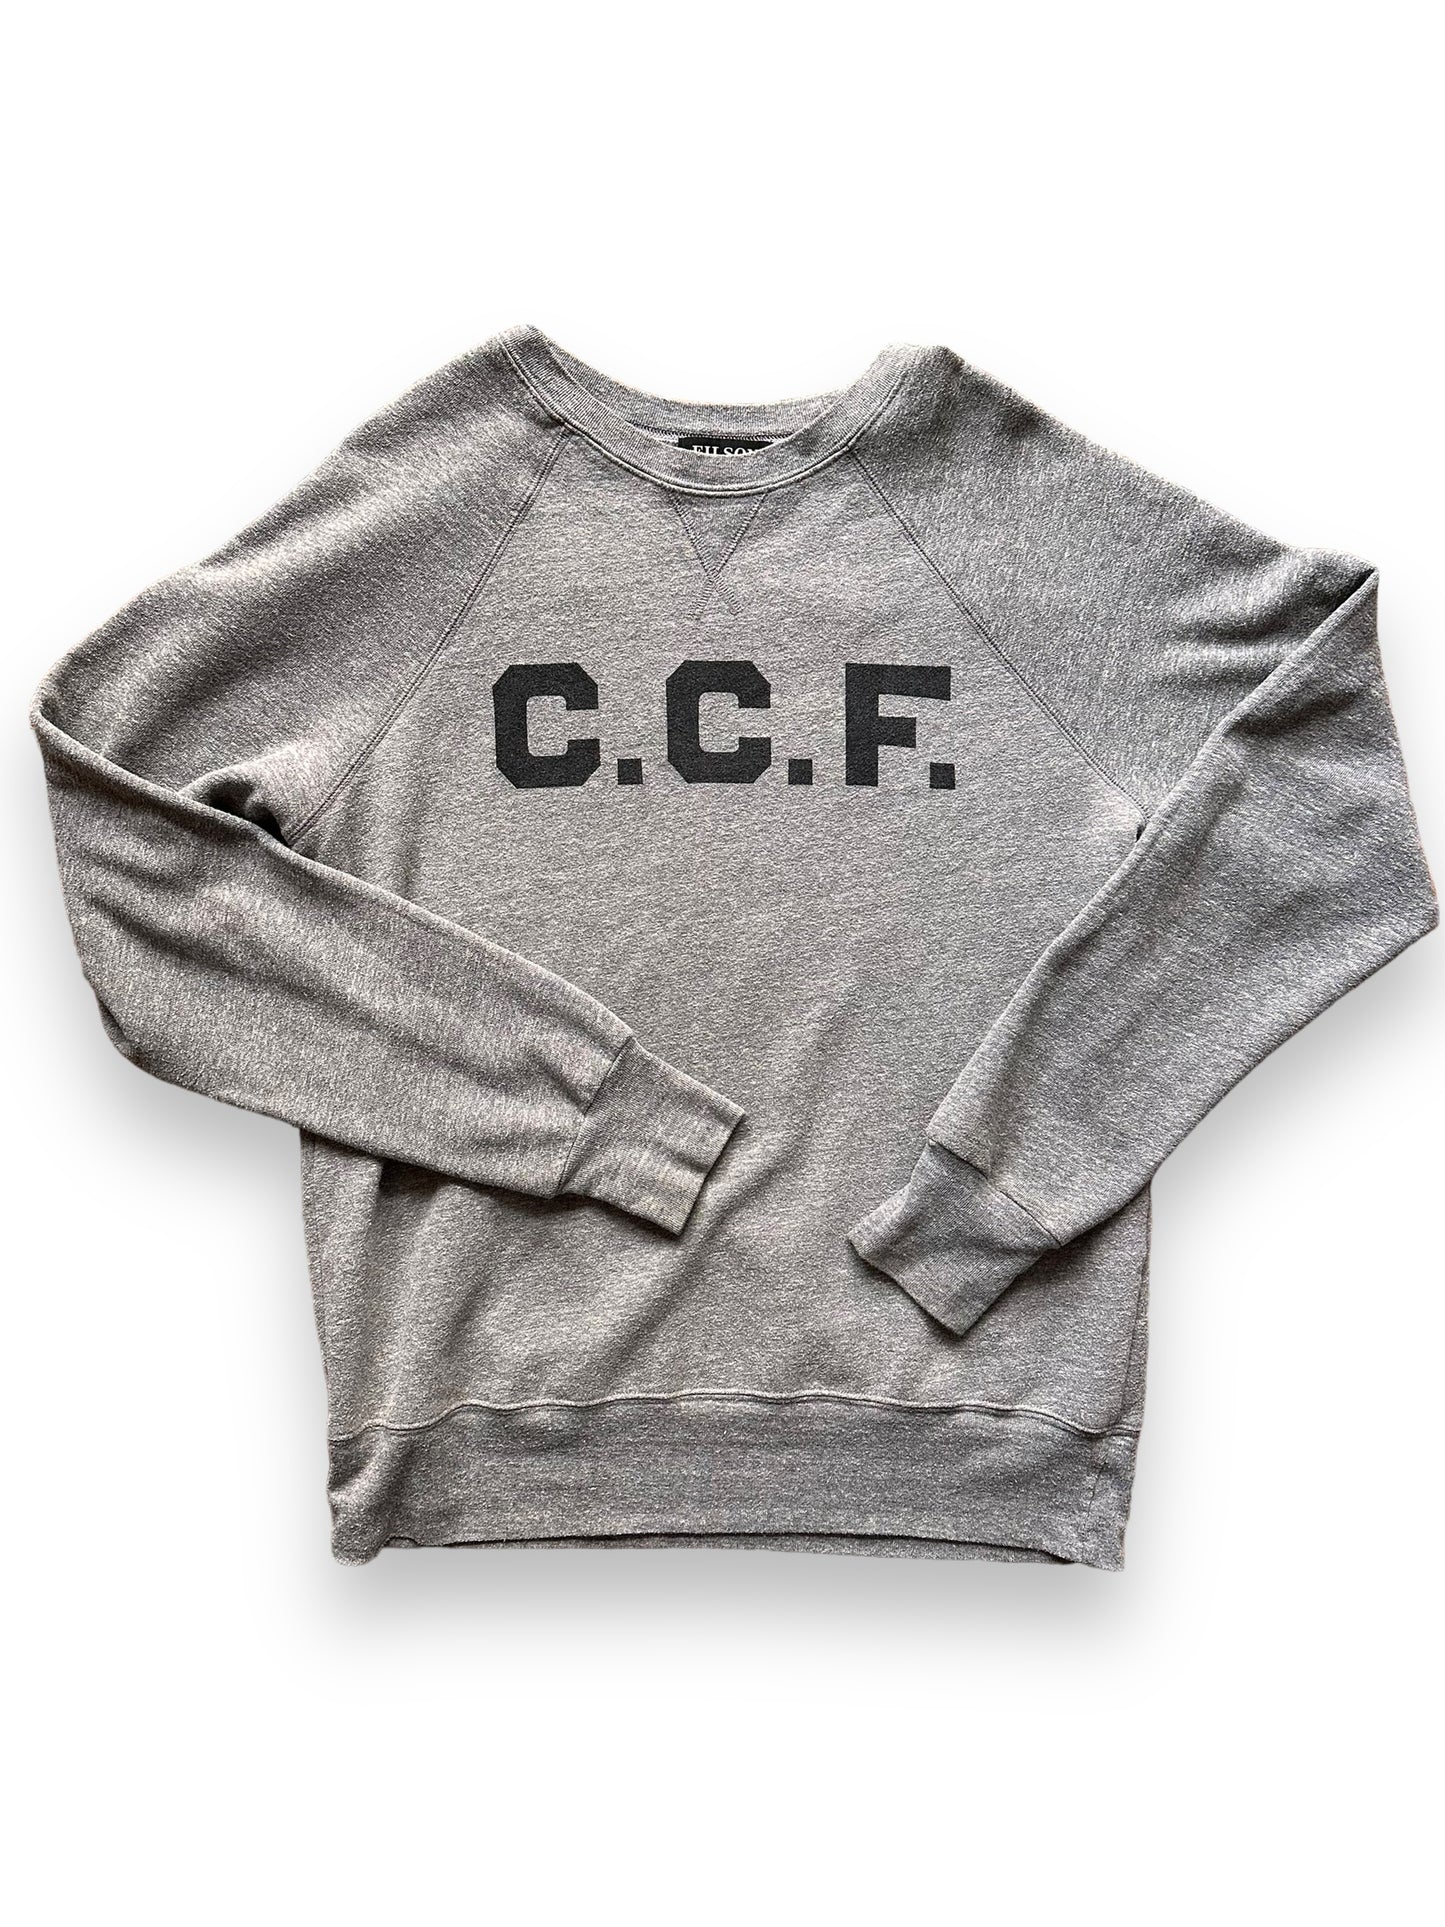 Front View of Filson CCF Single V Crewneck Sweatshirt SZ XL |  Barn Owl Vintage Goods Seattle | Filson Bargain Outlet